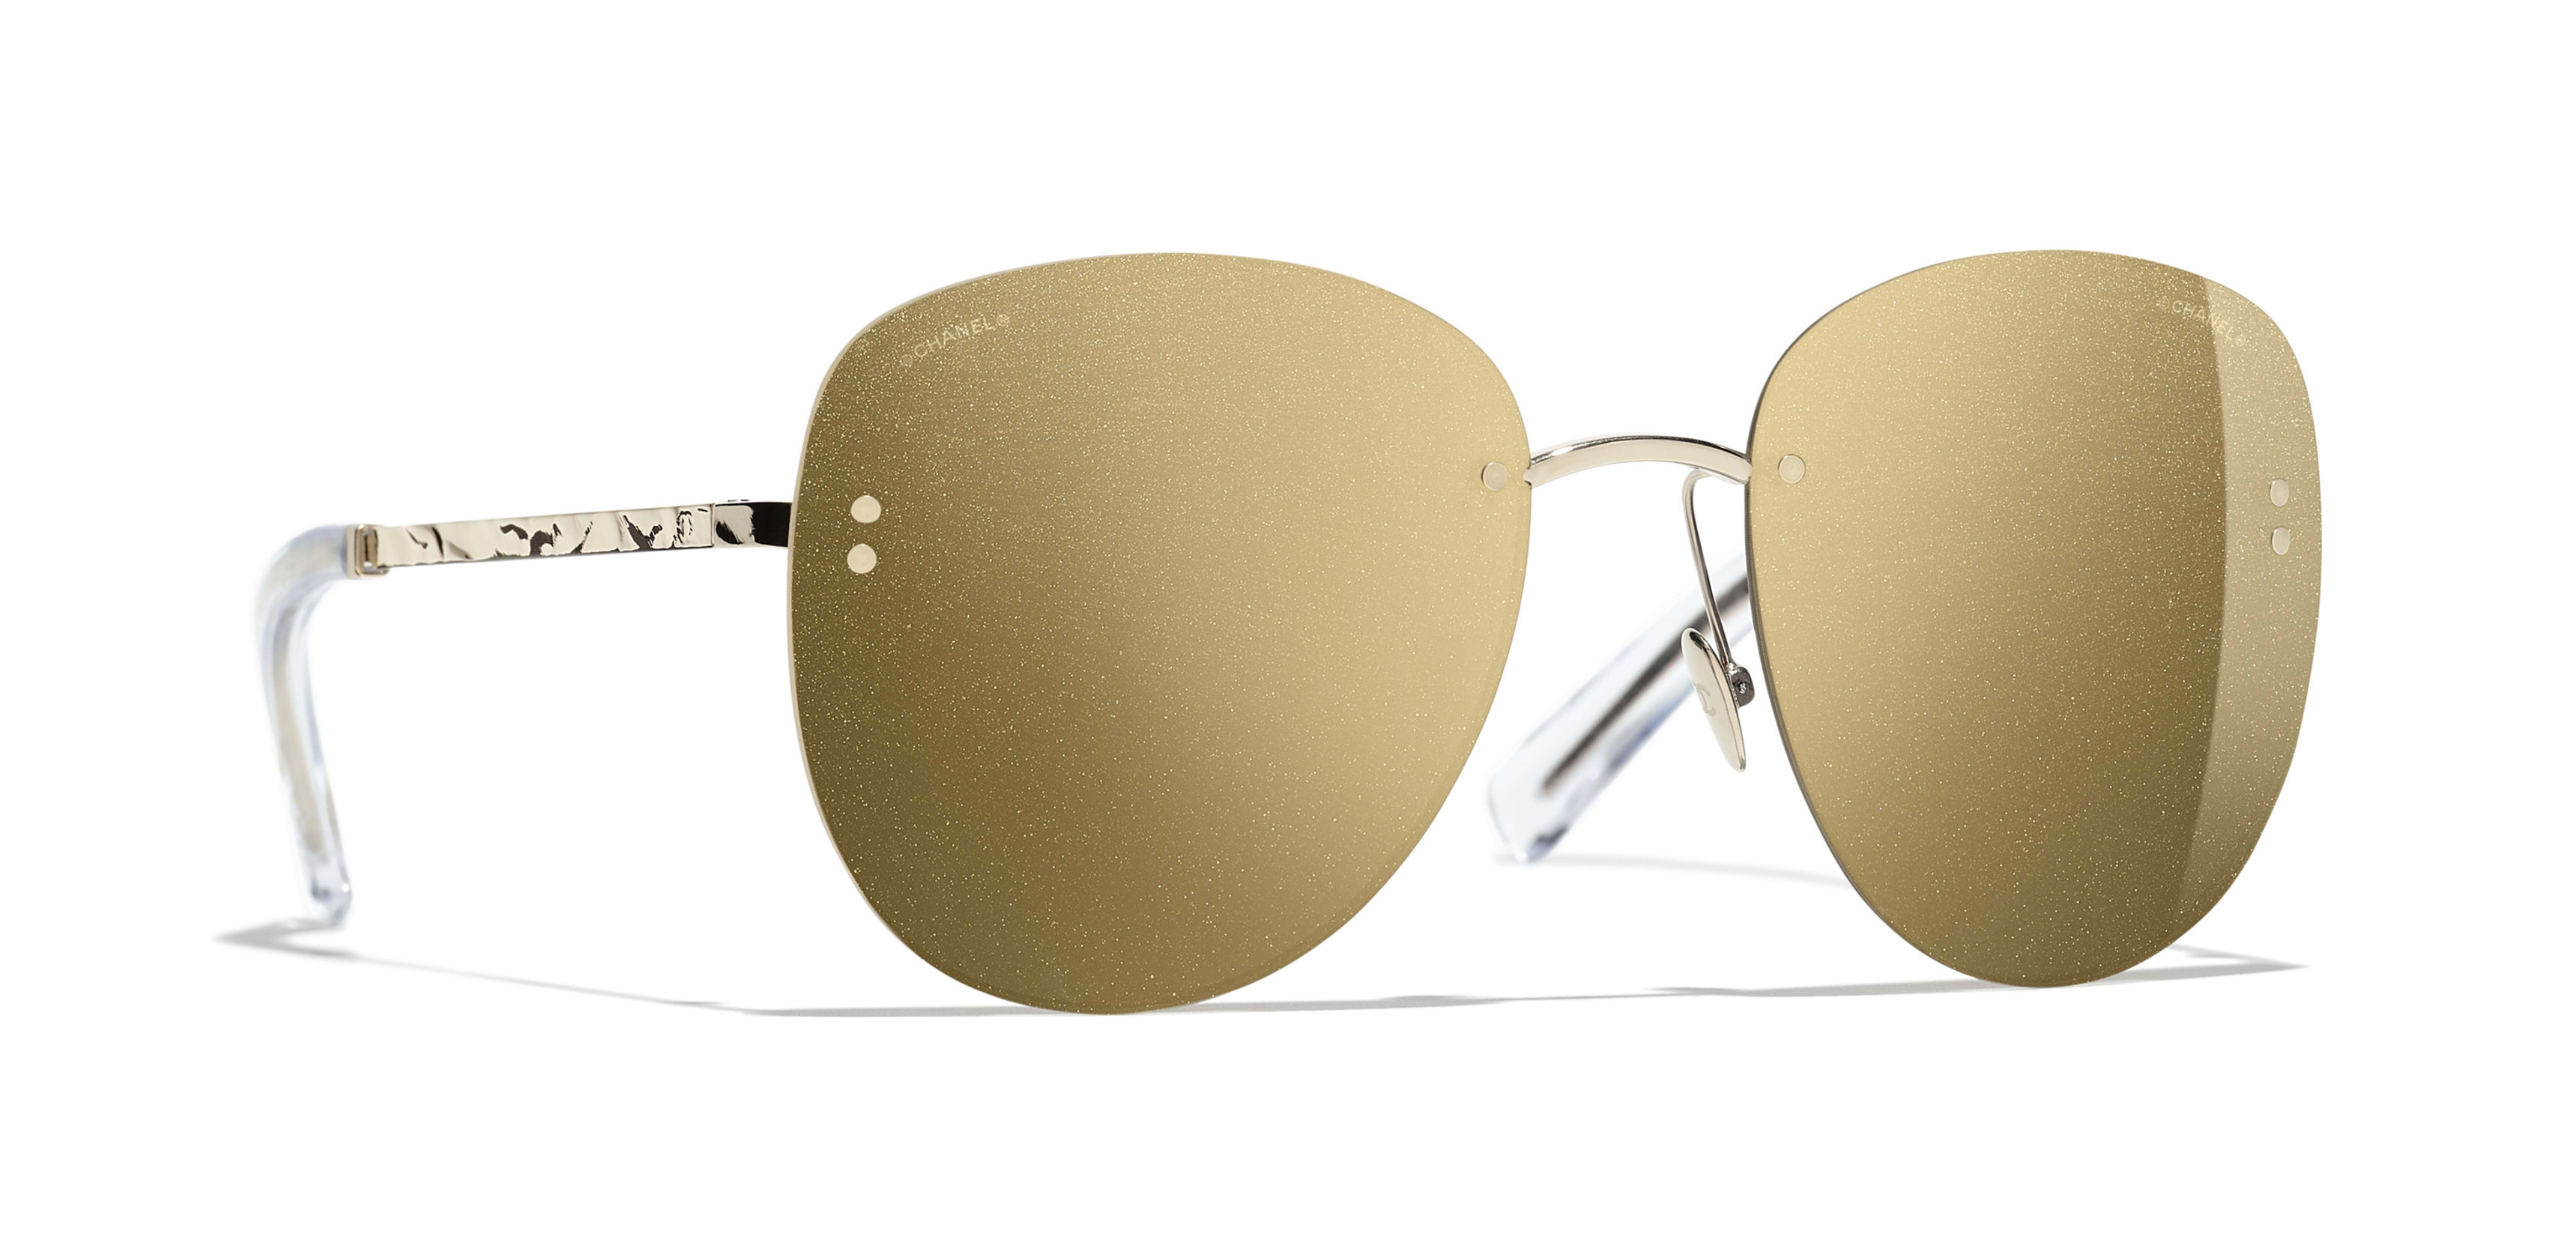 Chanel - Pilot Sunglasses - Gold Glitter - Chanel Eyewear - Avvenice